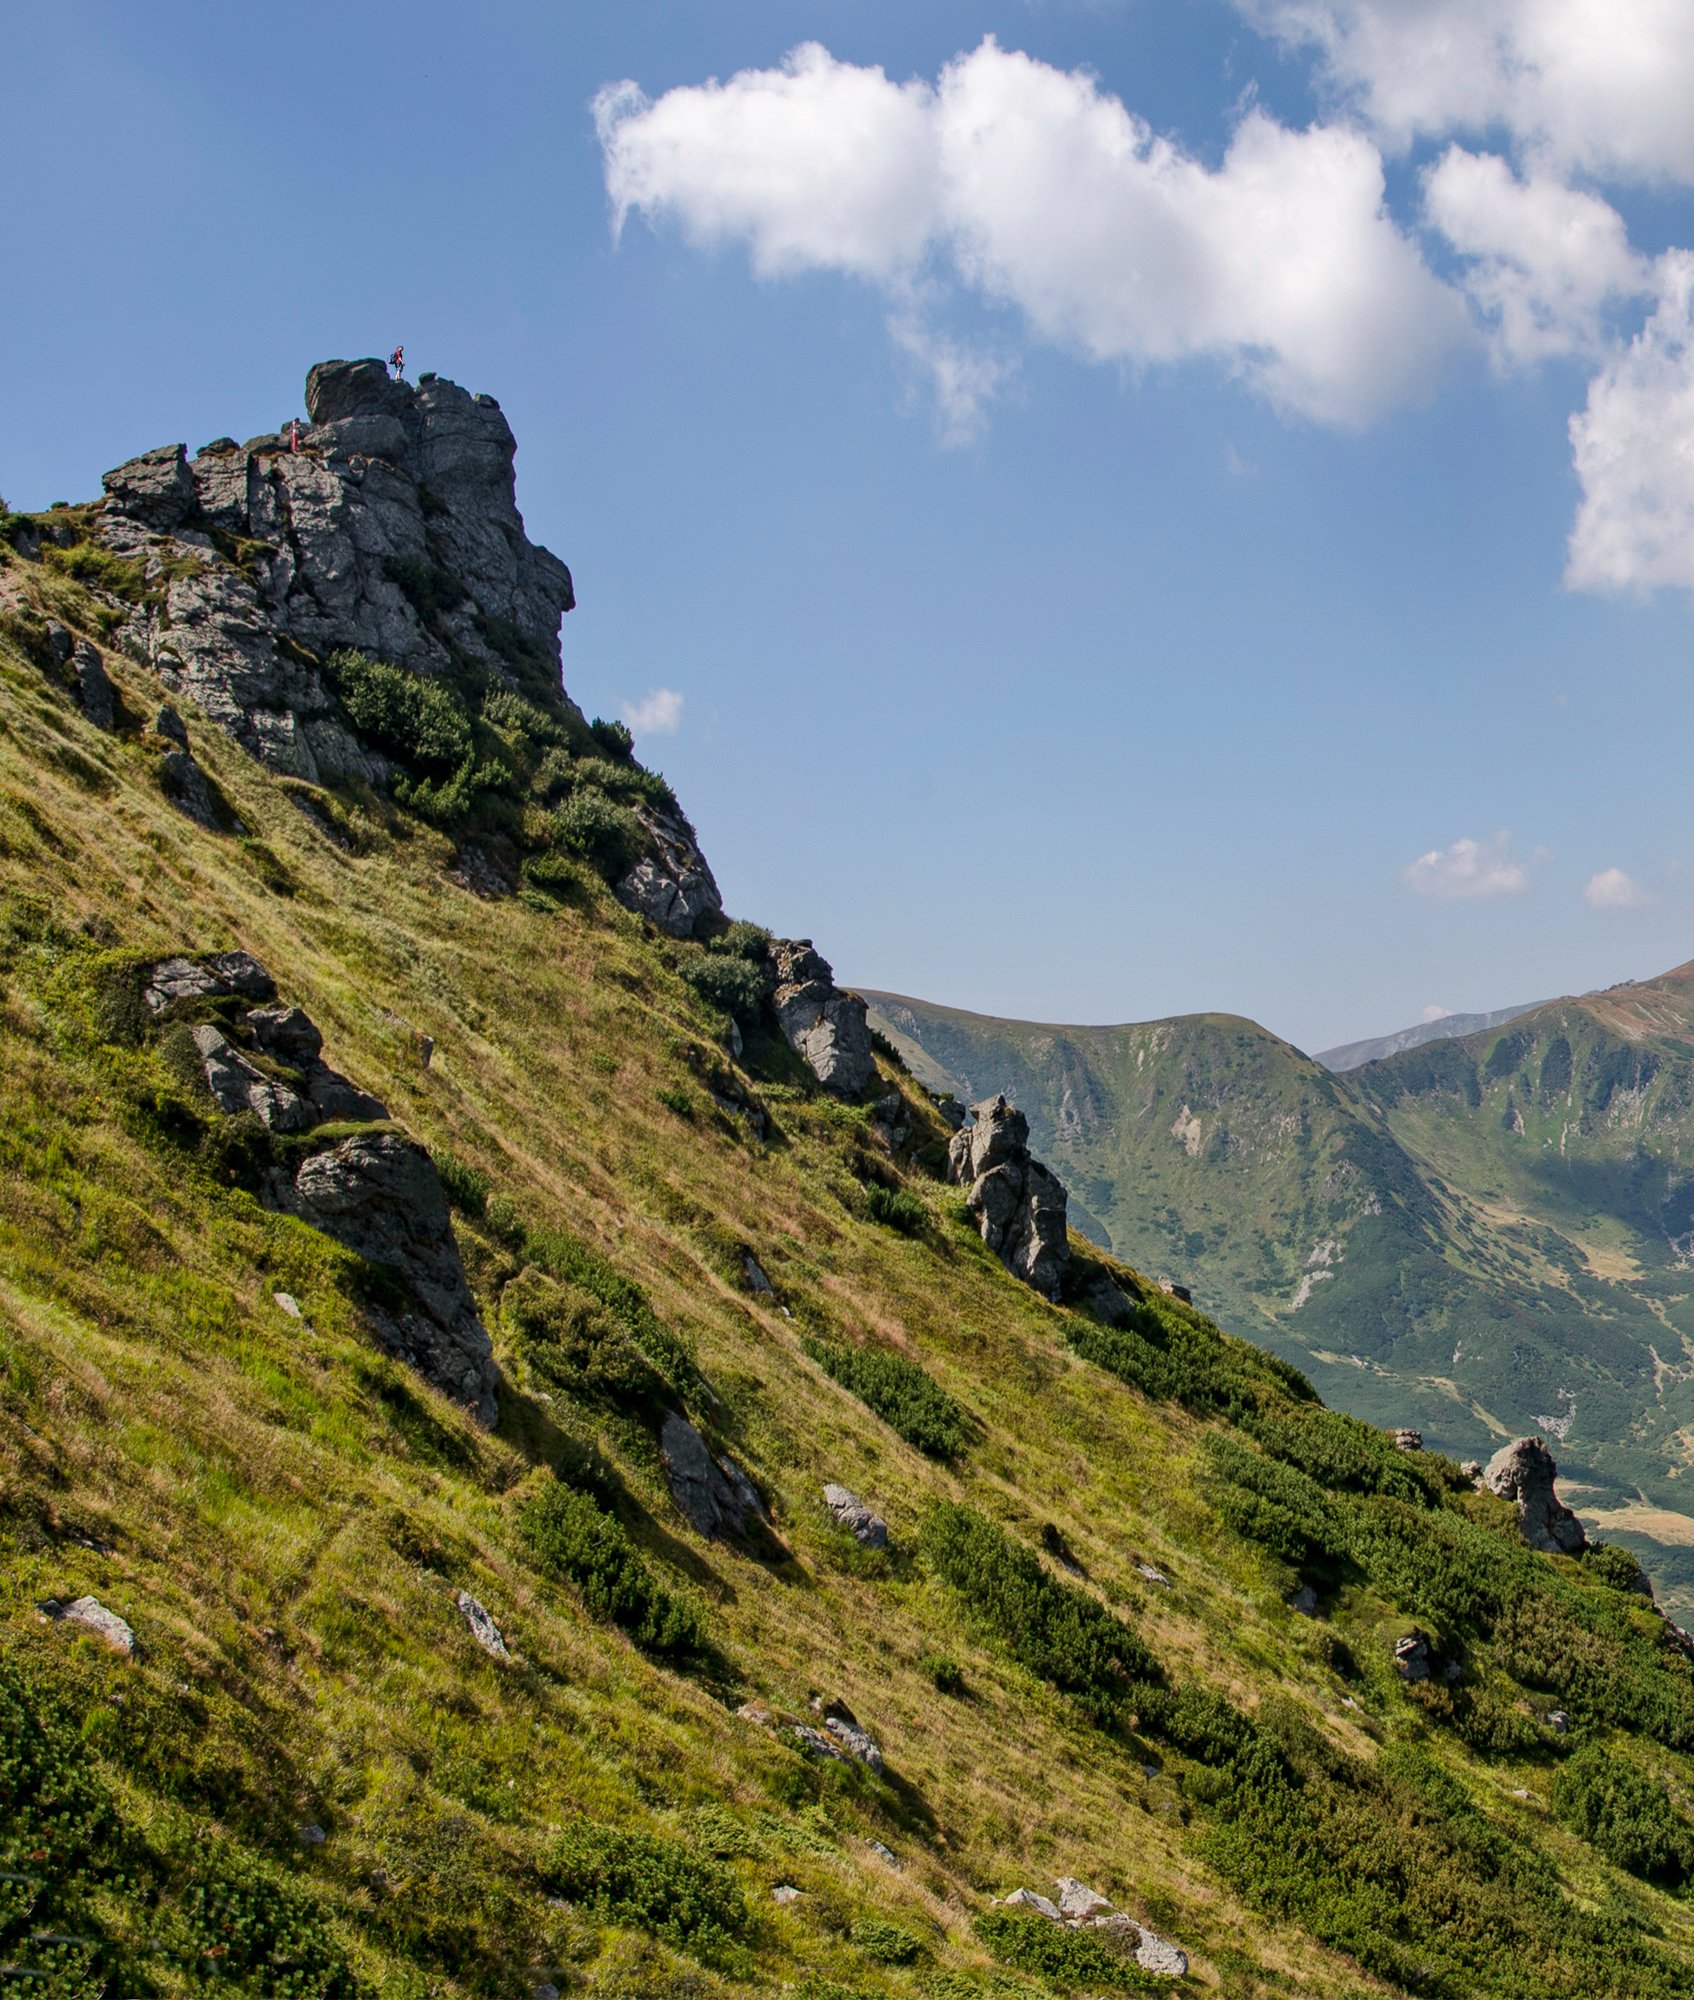 вухатый камень, карпаты, небо, облака, туристы, черногорский хребет, Валерий Наумов